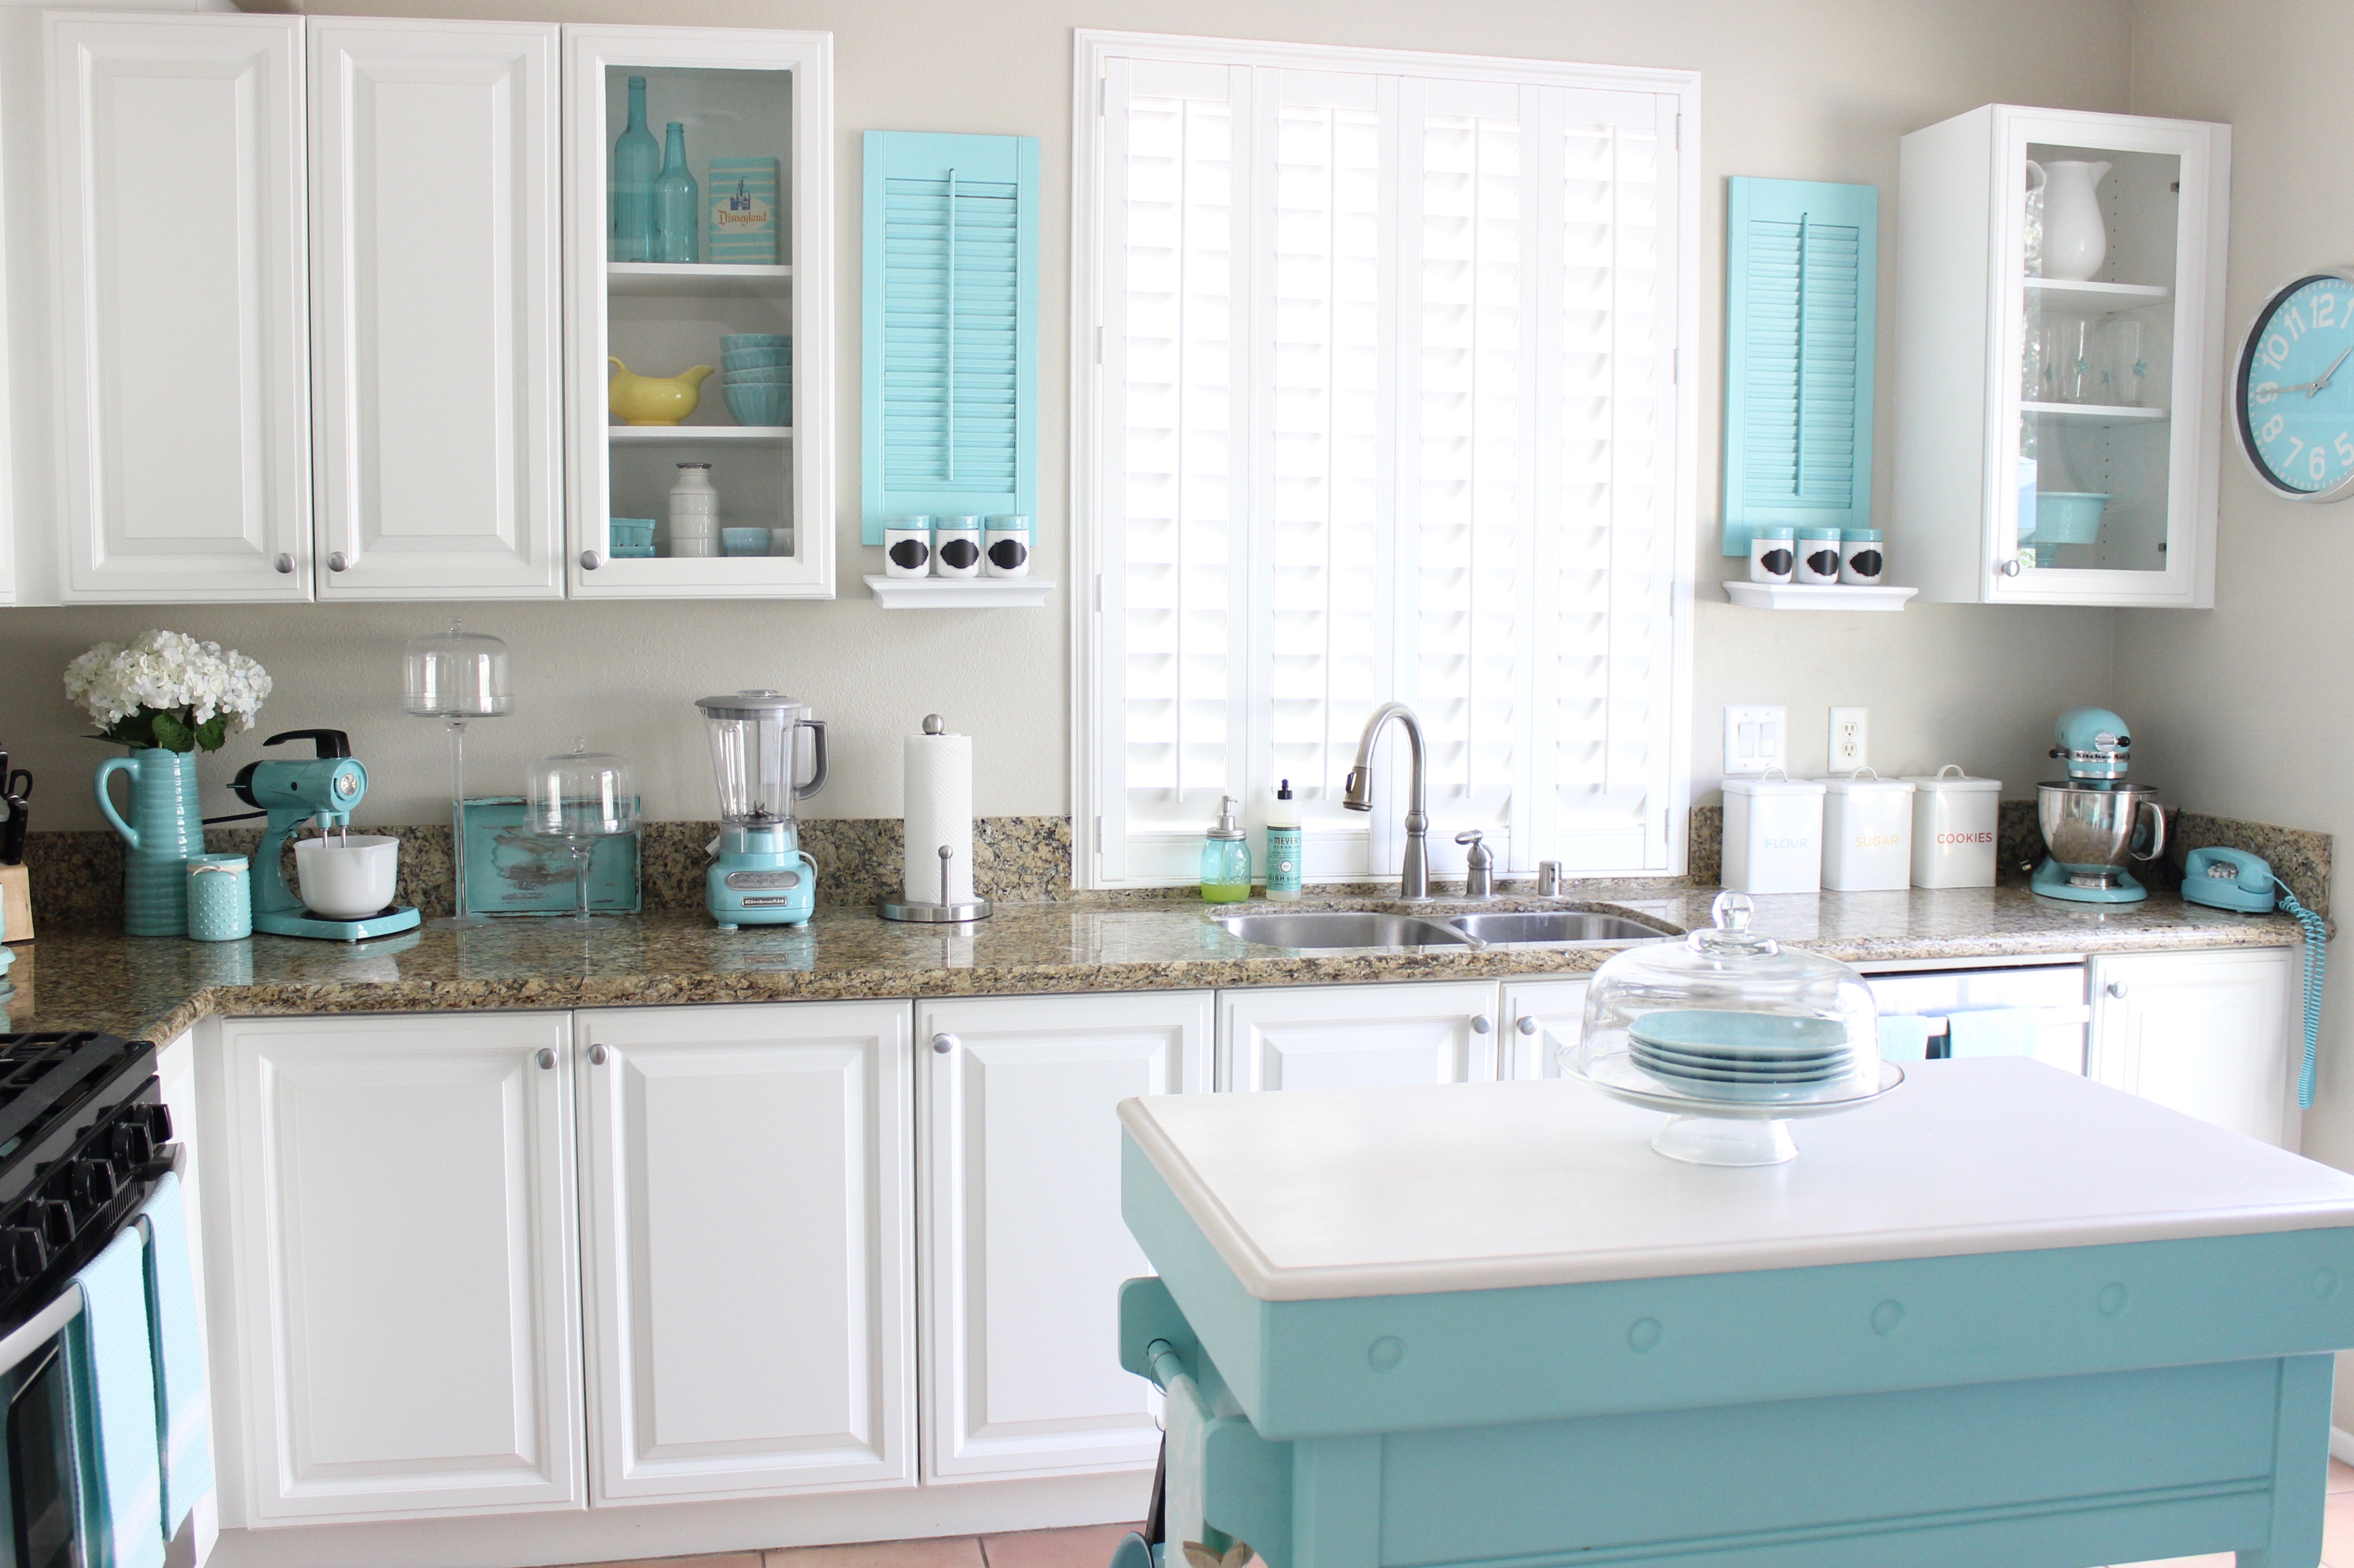 Breezy's Favorite Kitchen Finds! - Breezy Designs  Blue kitchen decor,  Yellow kitchen decor, Aqua kitchen